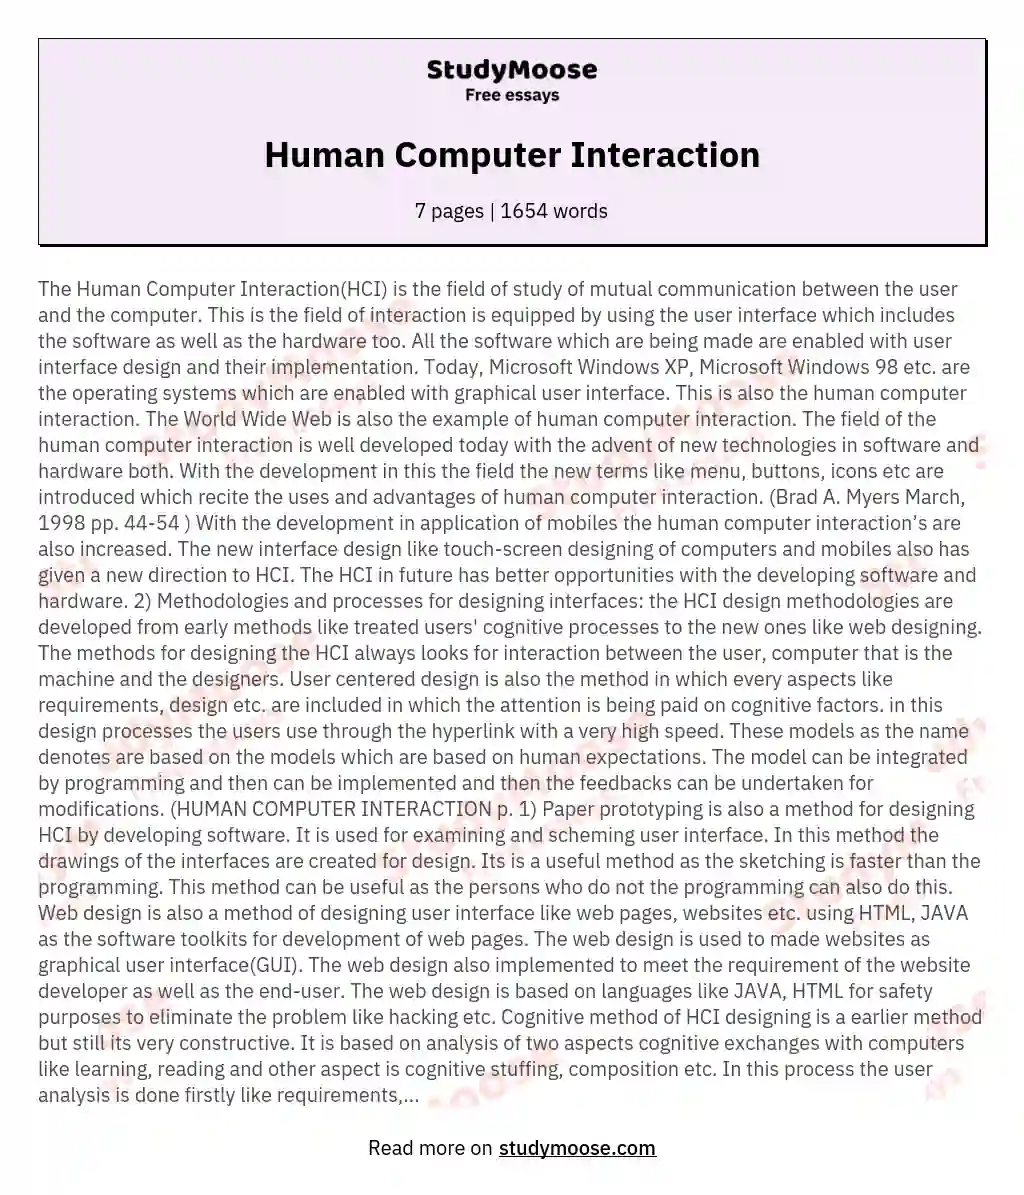 Human Computer Interaction essay